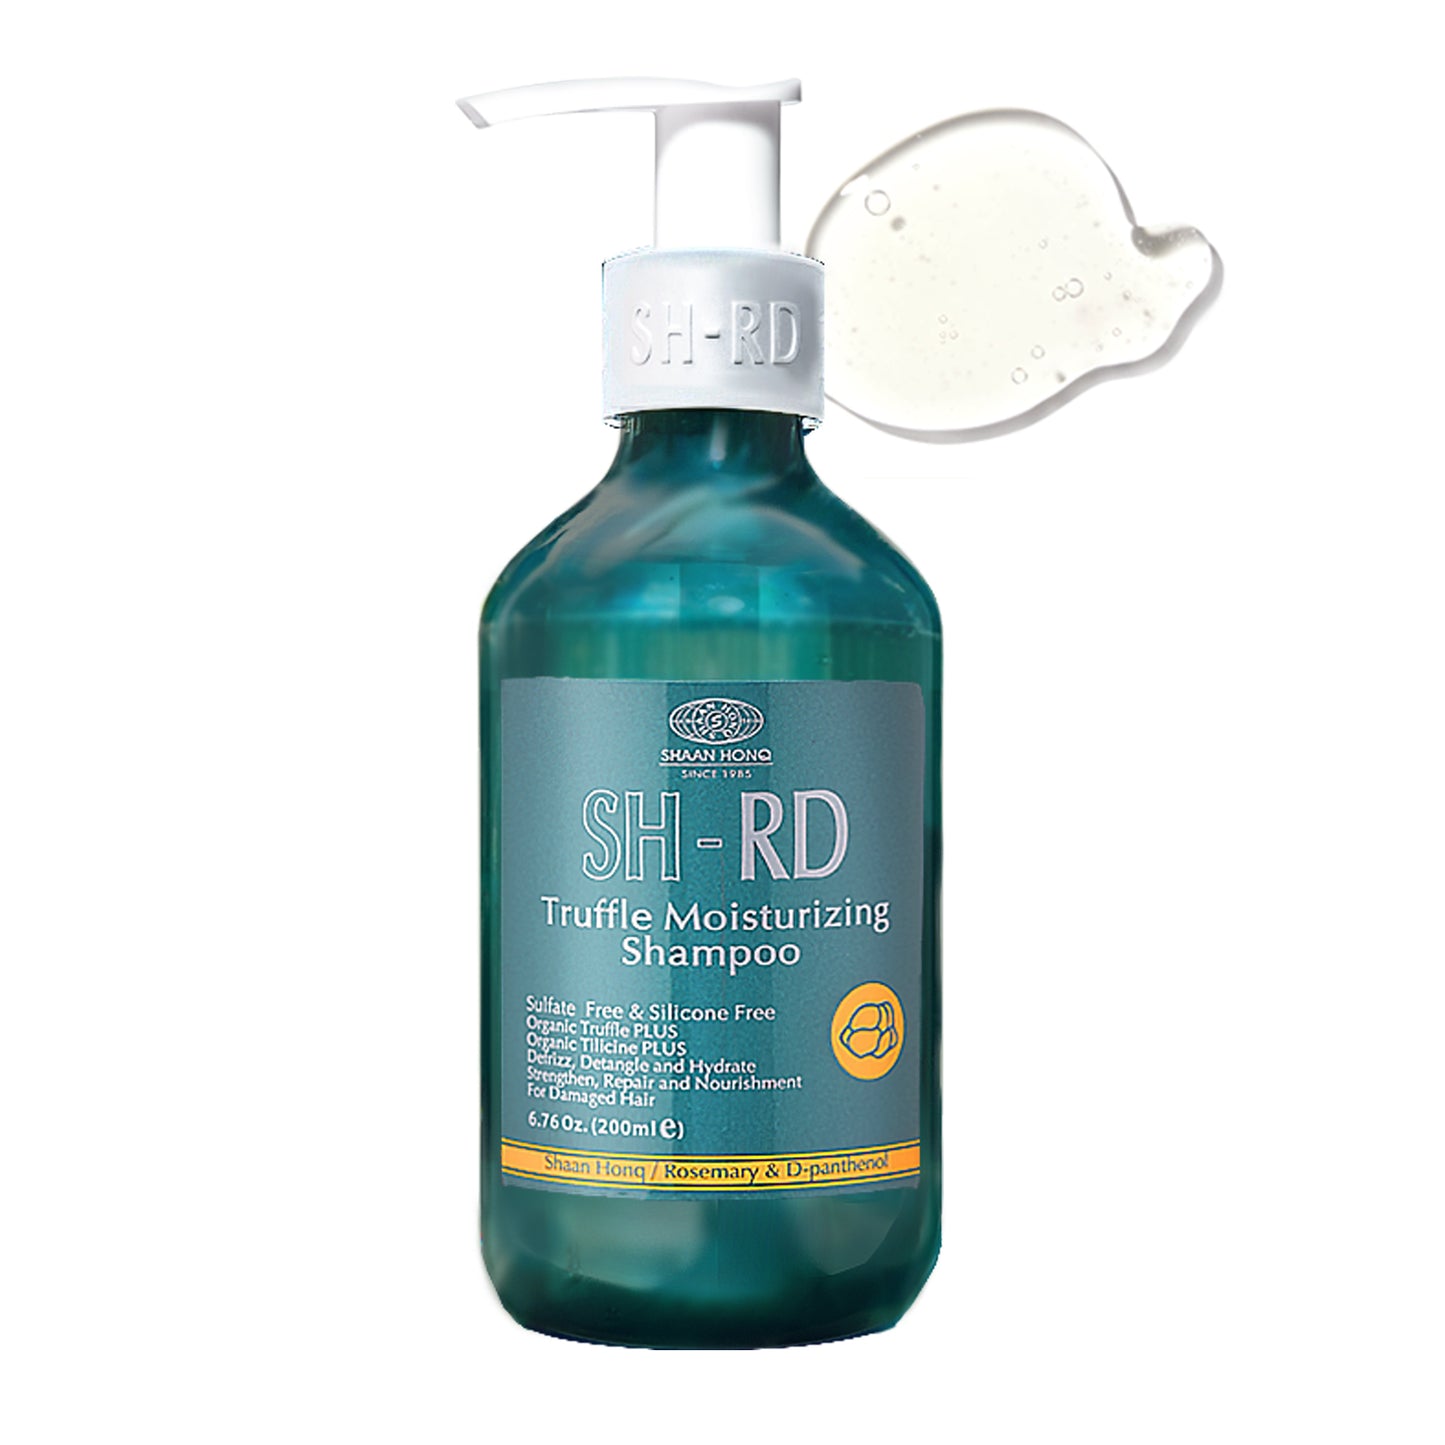 SH-RD Truffle Moisturizing Shampoo (6.76oz/200ml)